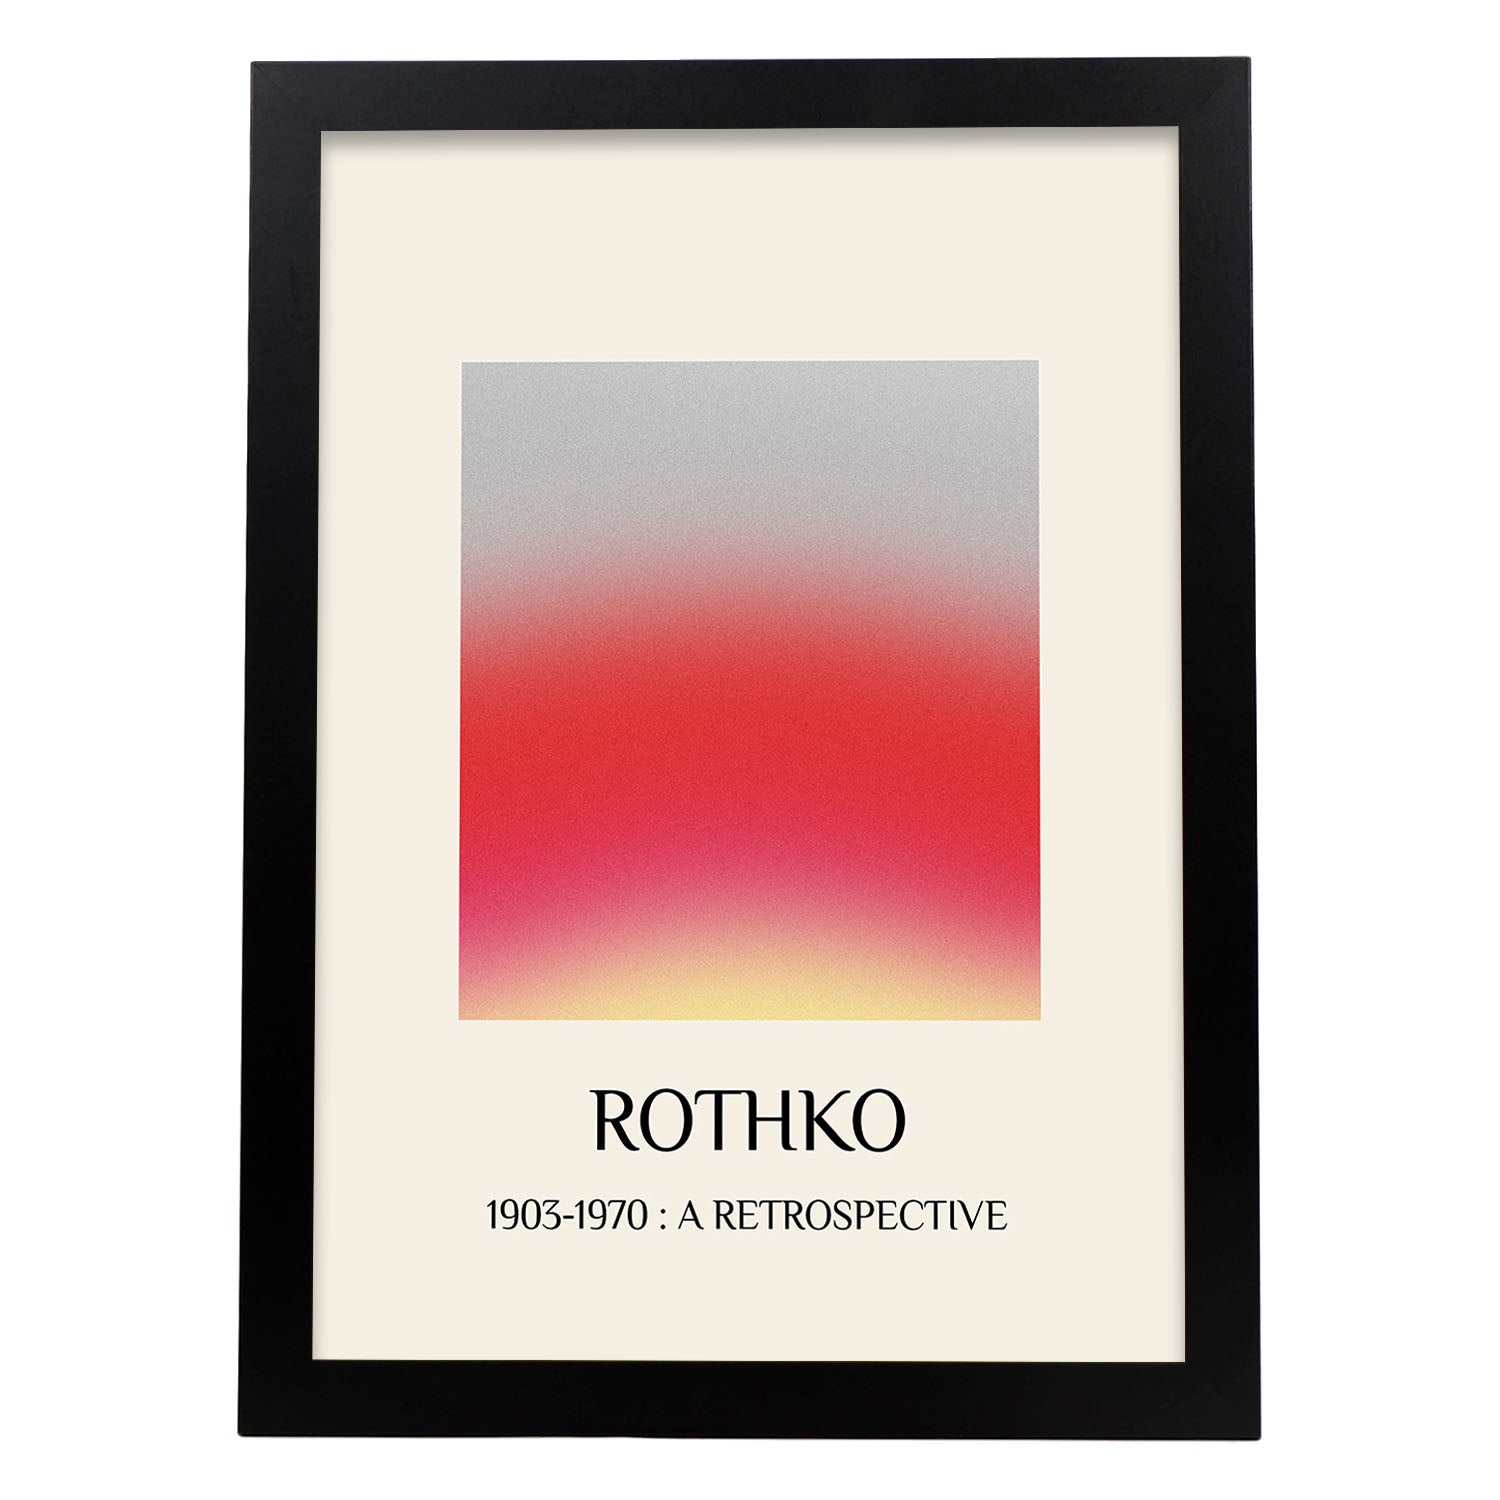 Lamina artistica decorativa con ilustración de Exposición Rothko 5 estilo expresionismo abstracto-Artwork-Nacnic-A3-Marco Negro-Nacnic Estudio SL